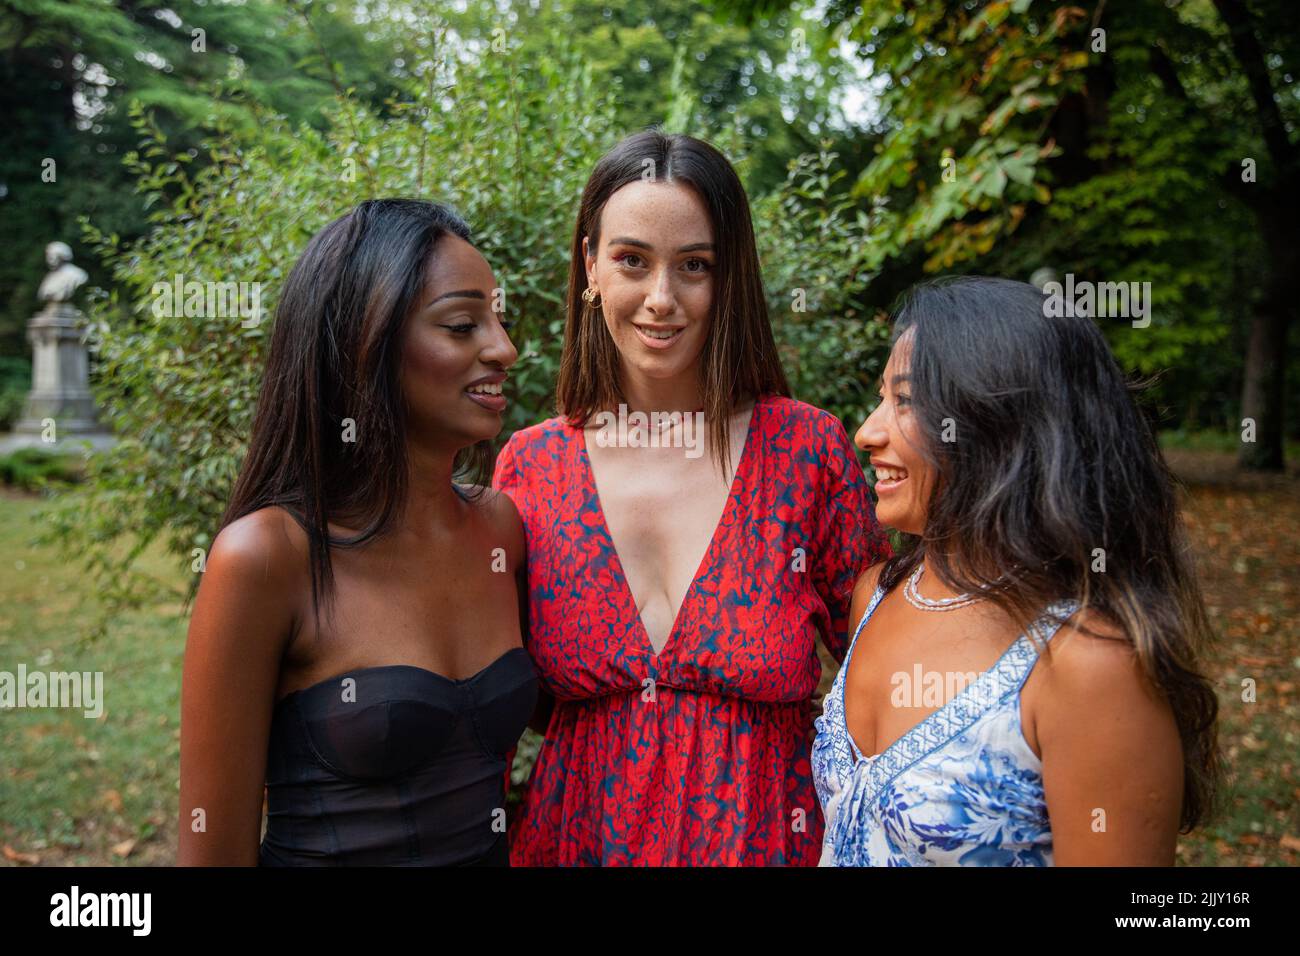 Tres niñas de diferentes etnias juntas, concepto de diversidad e integración entre mujeres Foto de stock